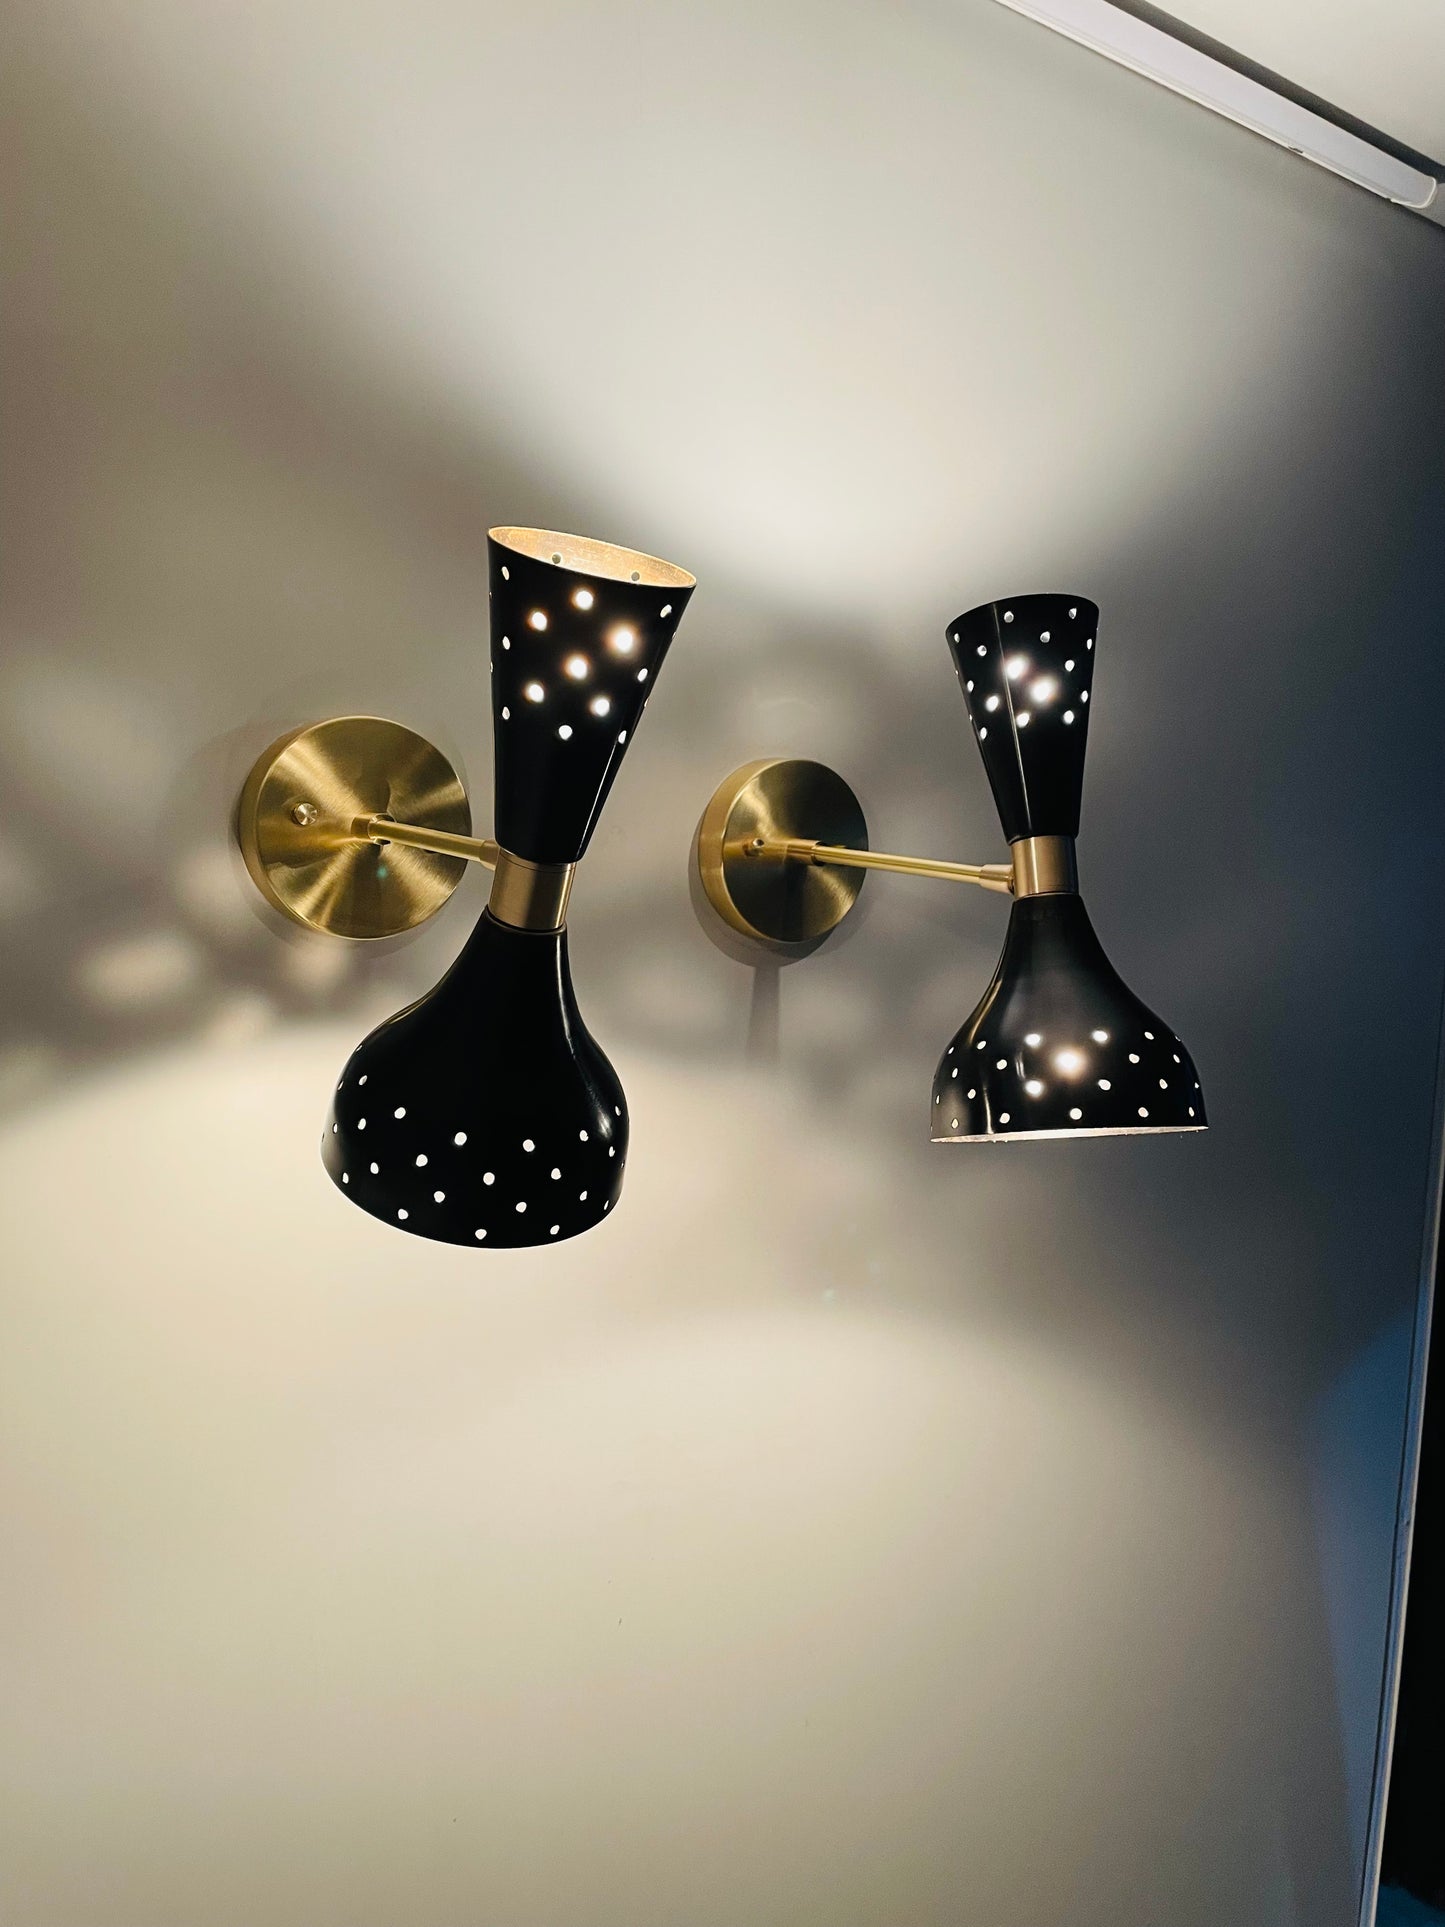 Detailed Design of Italian Modern Stilnovo Style Wall Sconce Set - Brass Wall Light Lamps